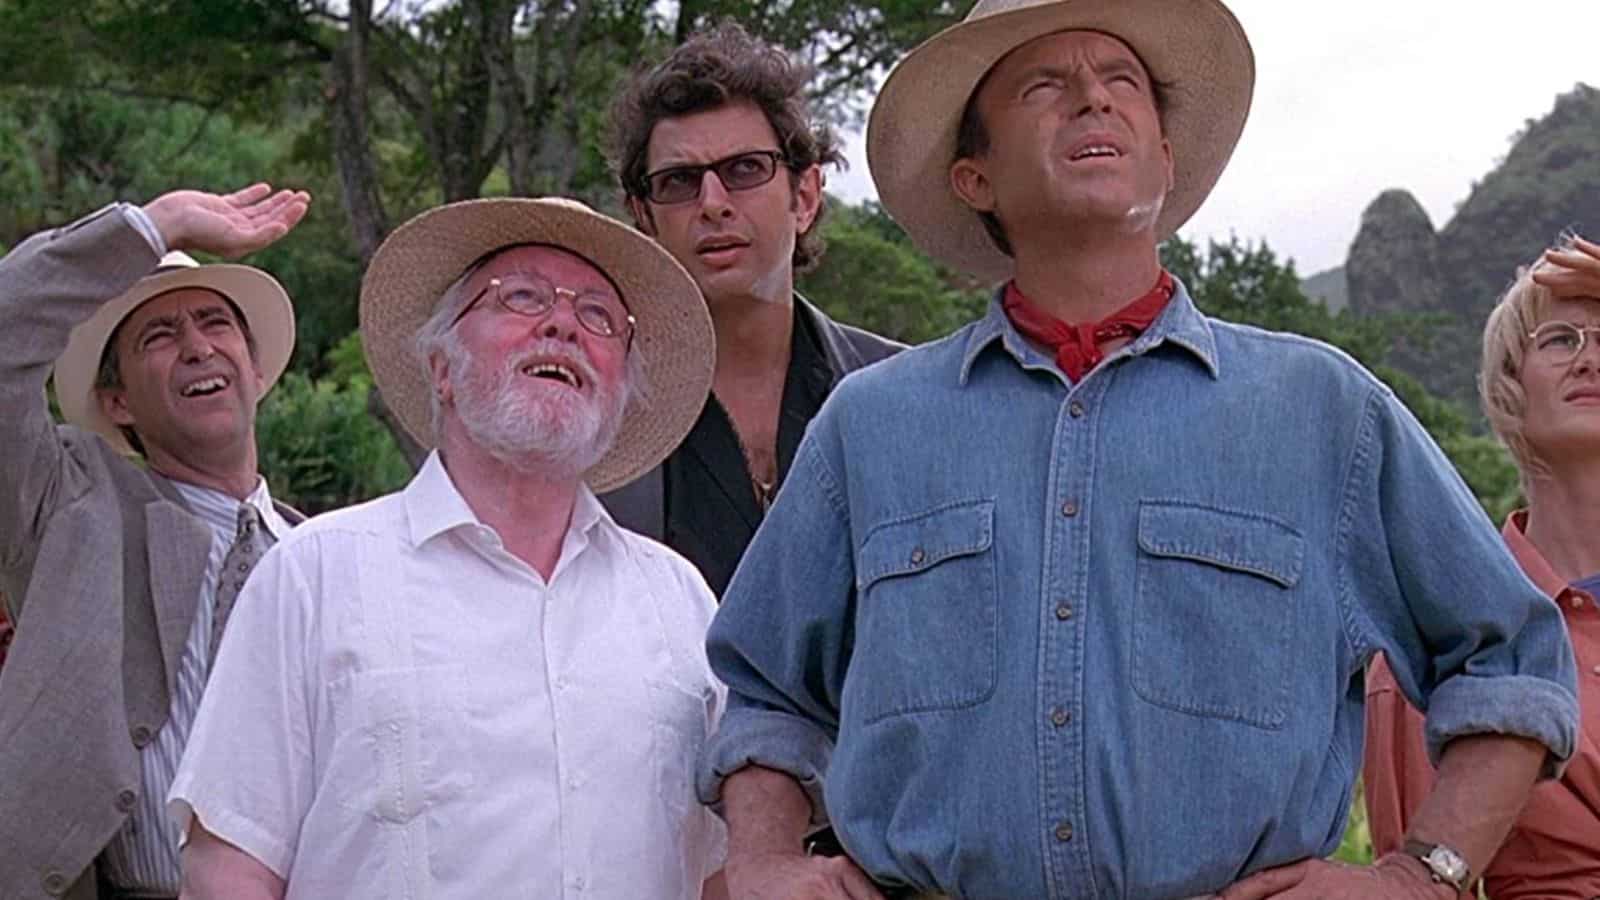 Jurassic Park – Sudden Elevation Change Universal Studios